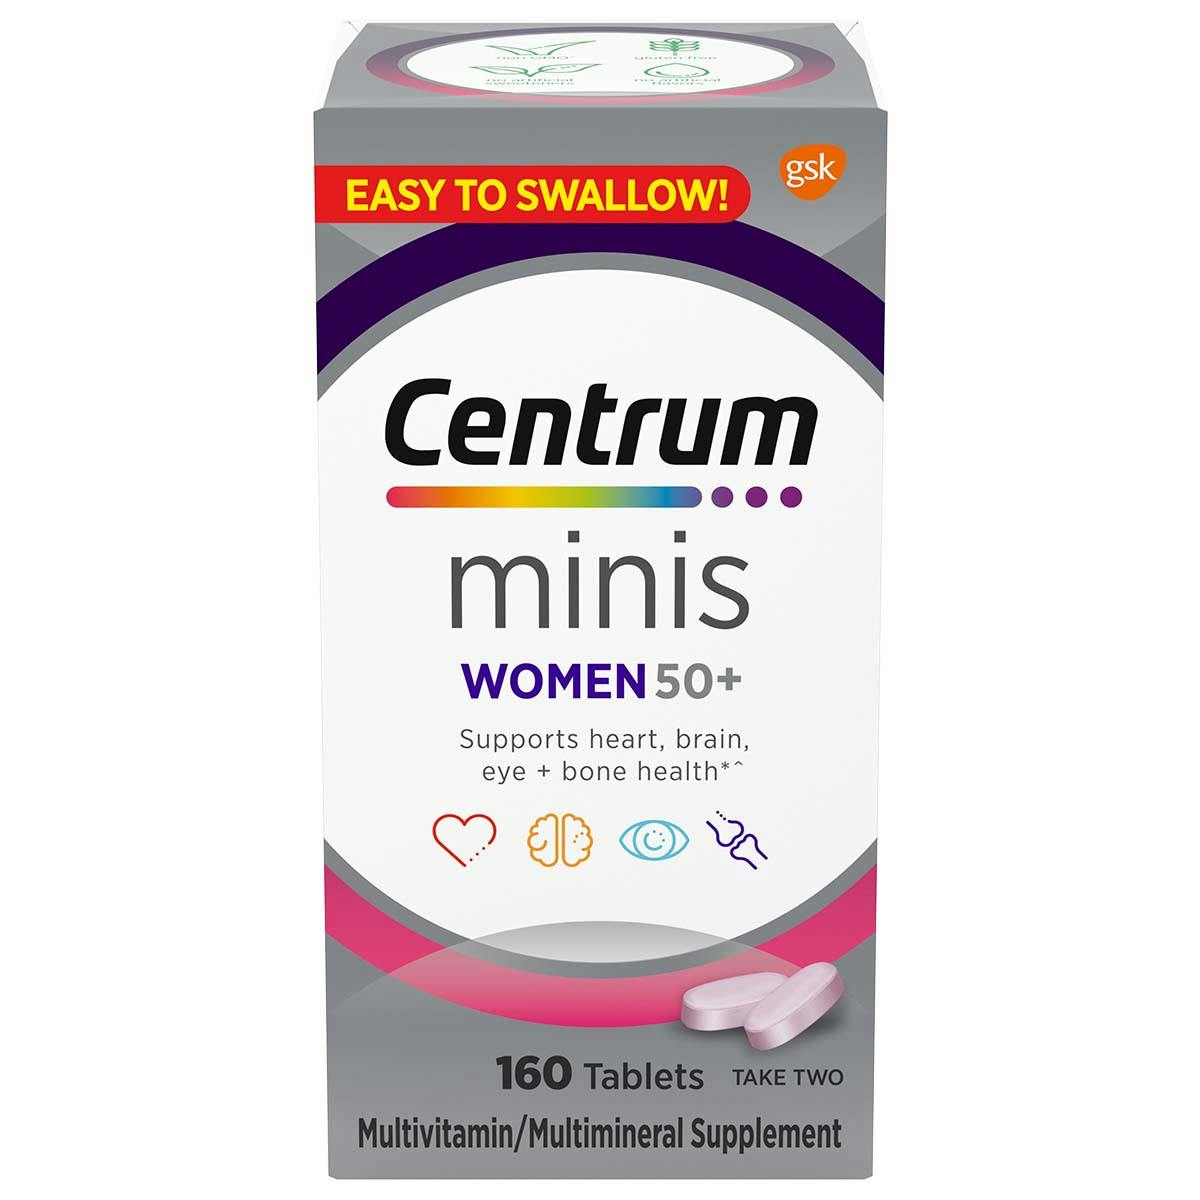 Box of Centrum Minis Women 50+